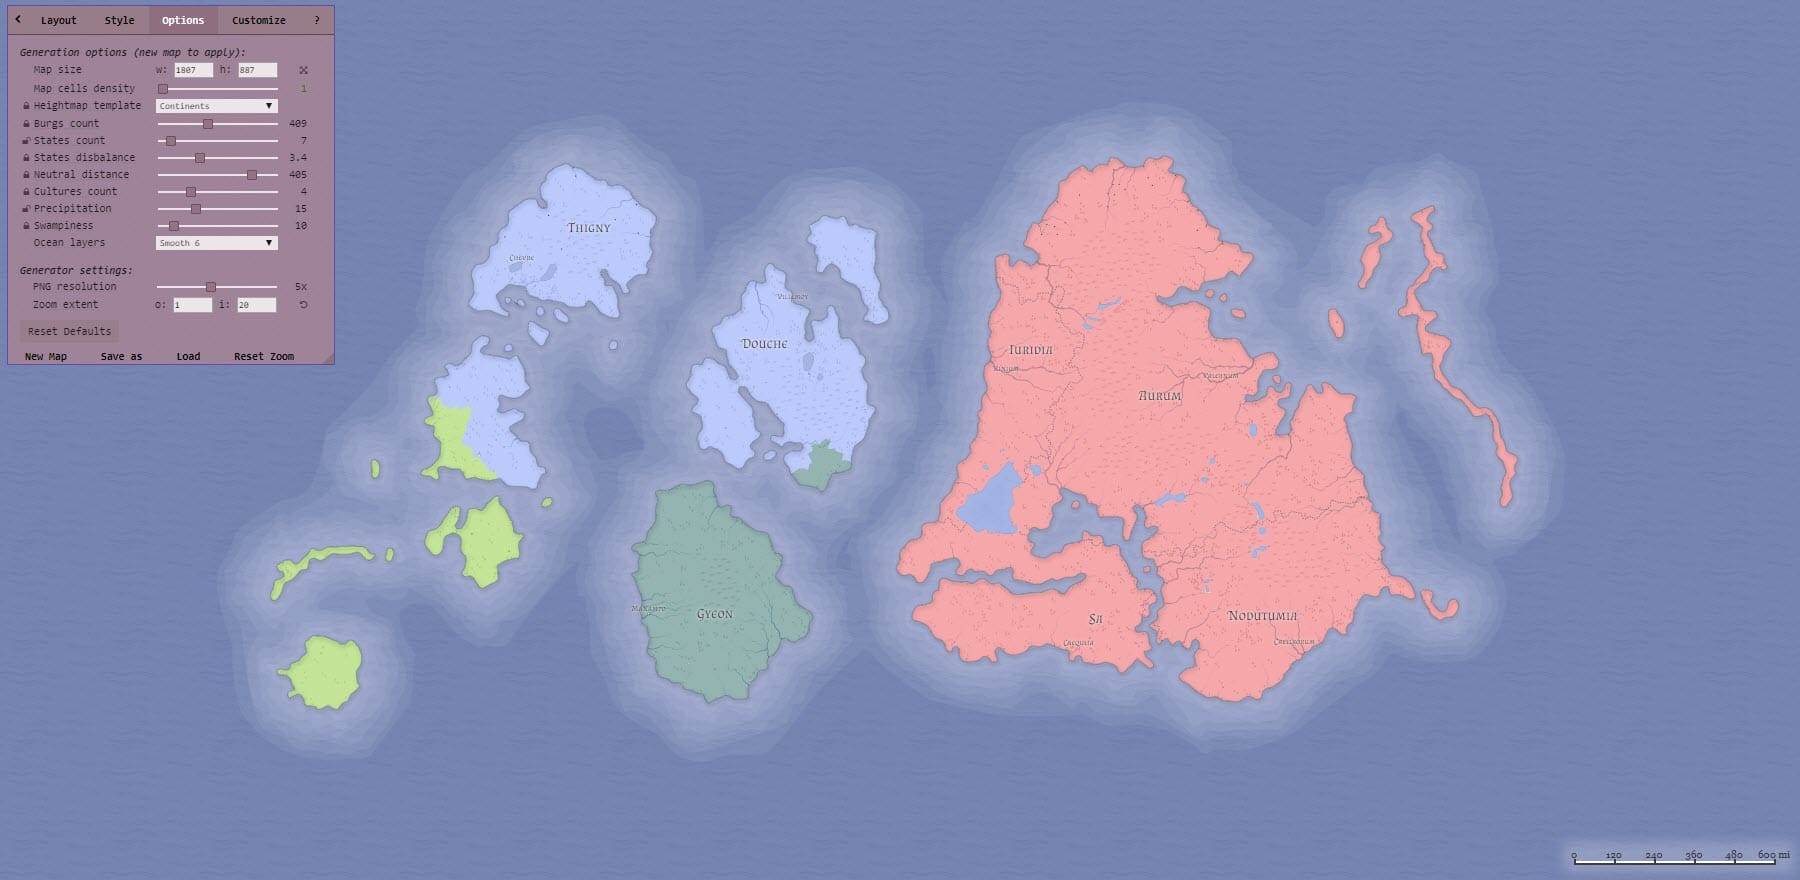 fictional world map generator